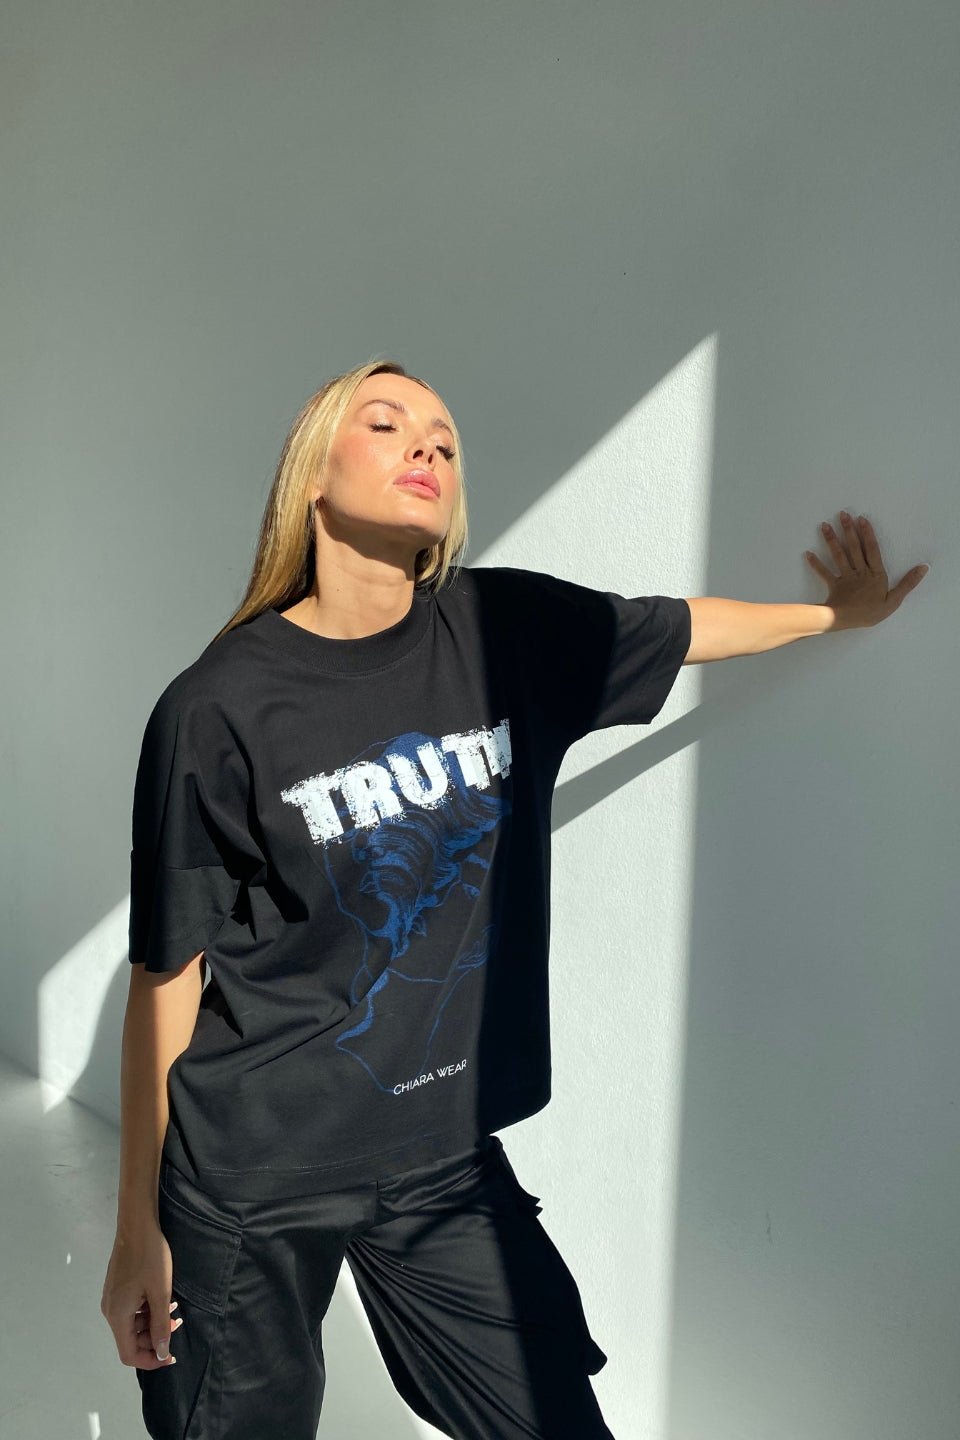 T-shirt damski oversize TRUTH - czarny - Chiara Wear